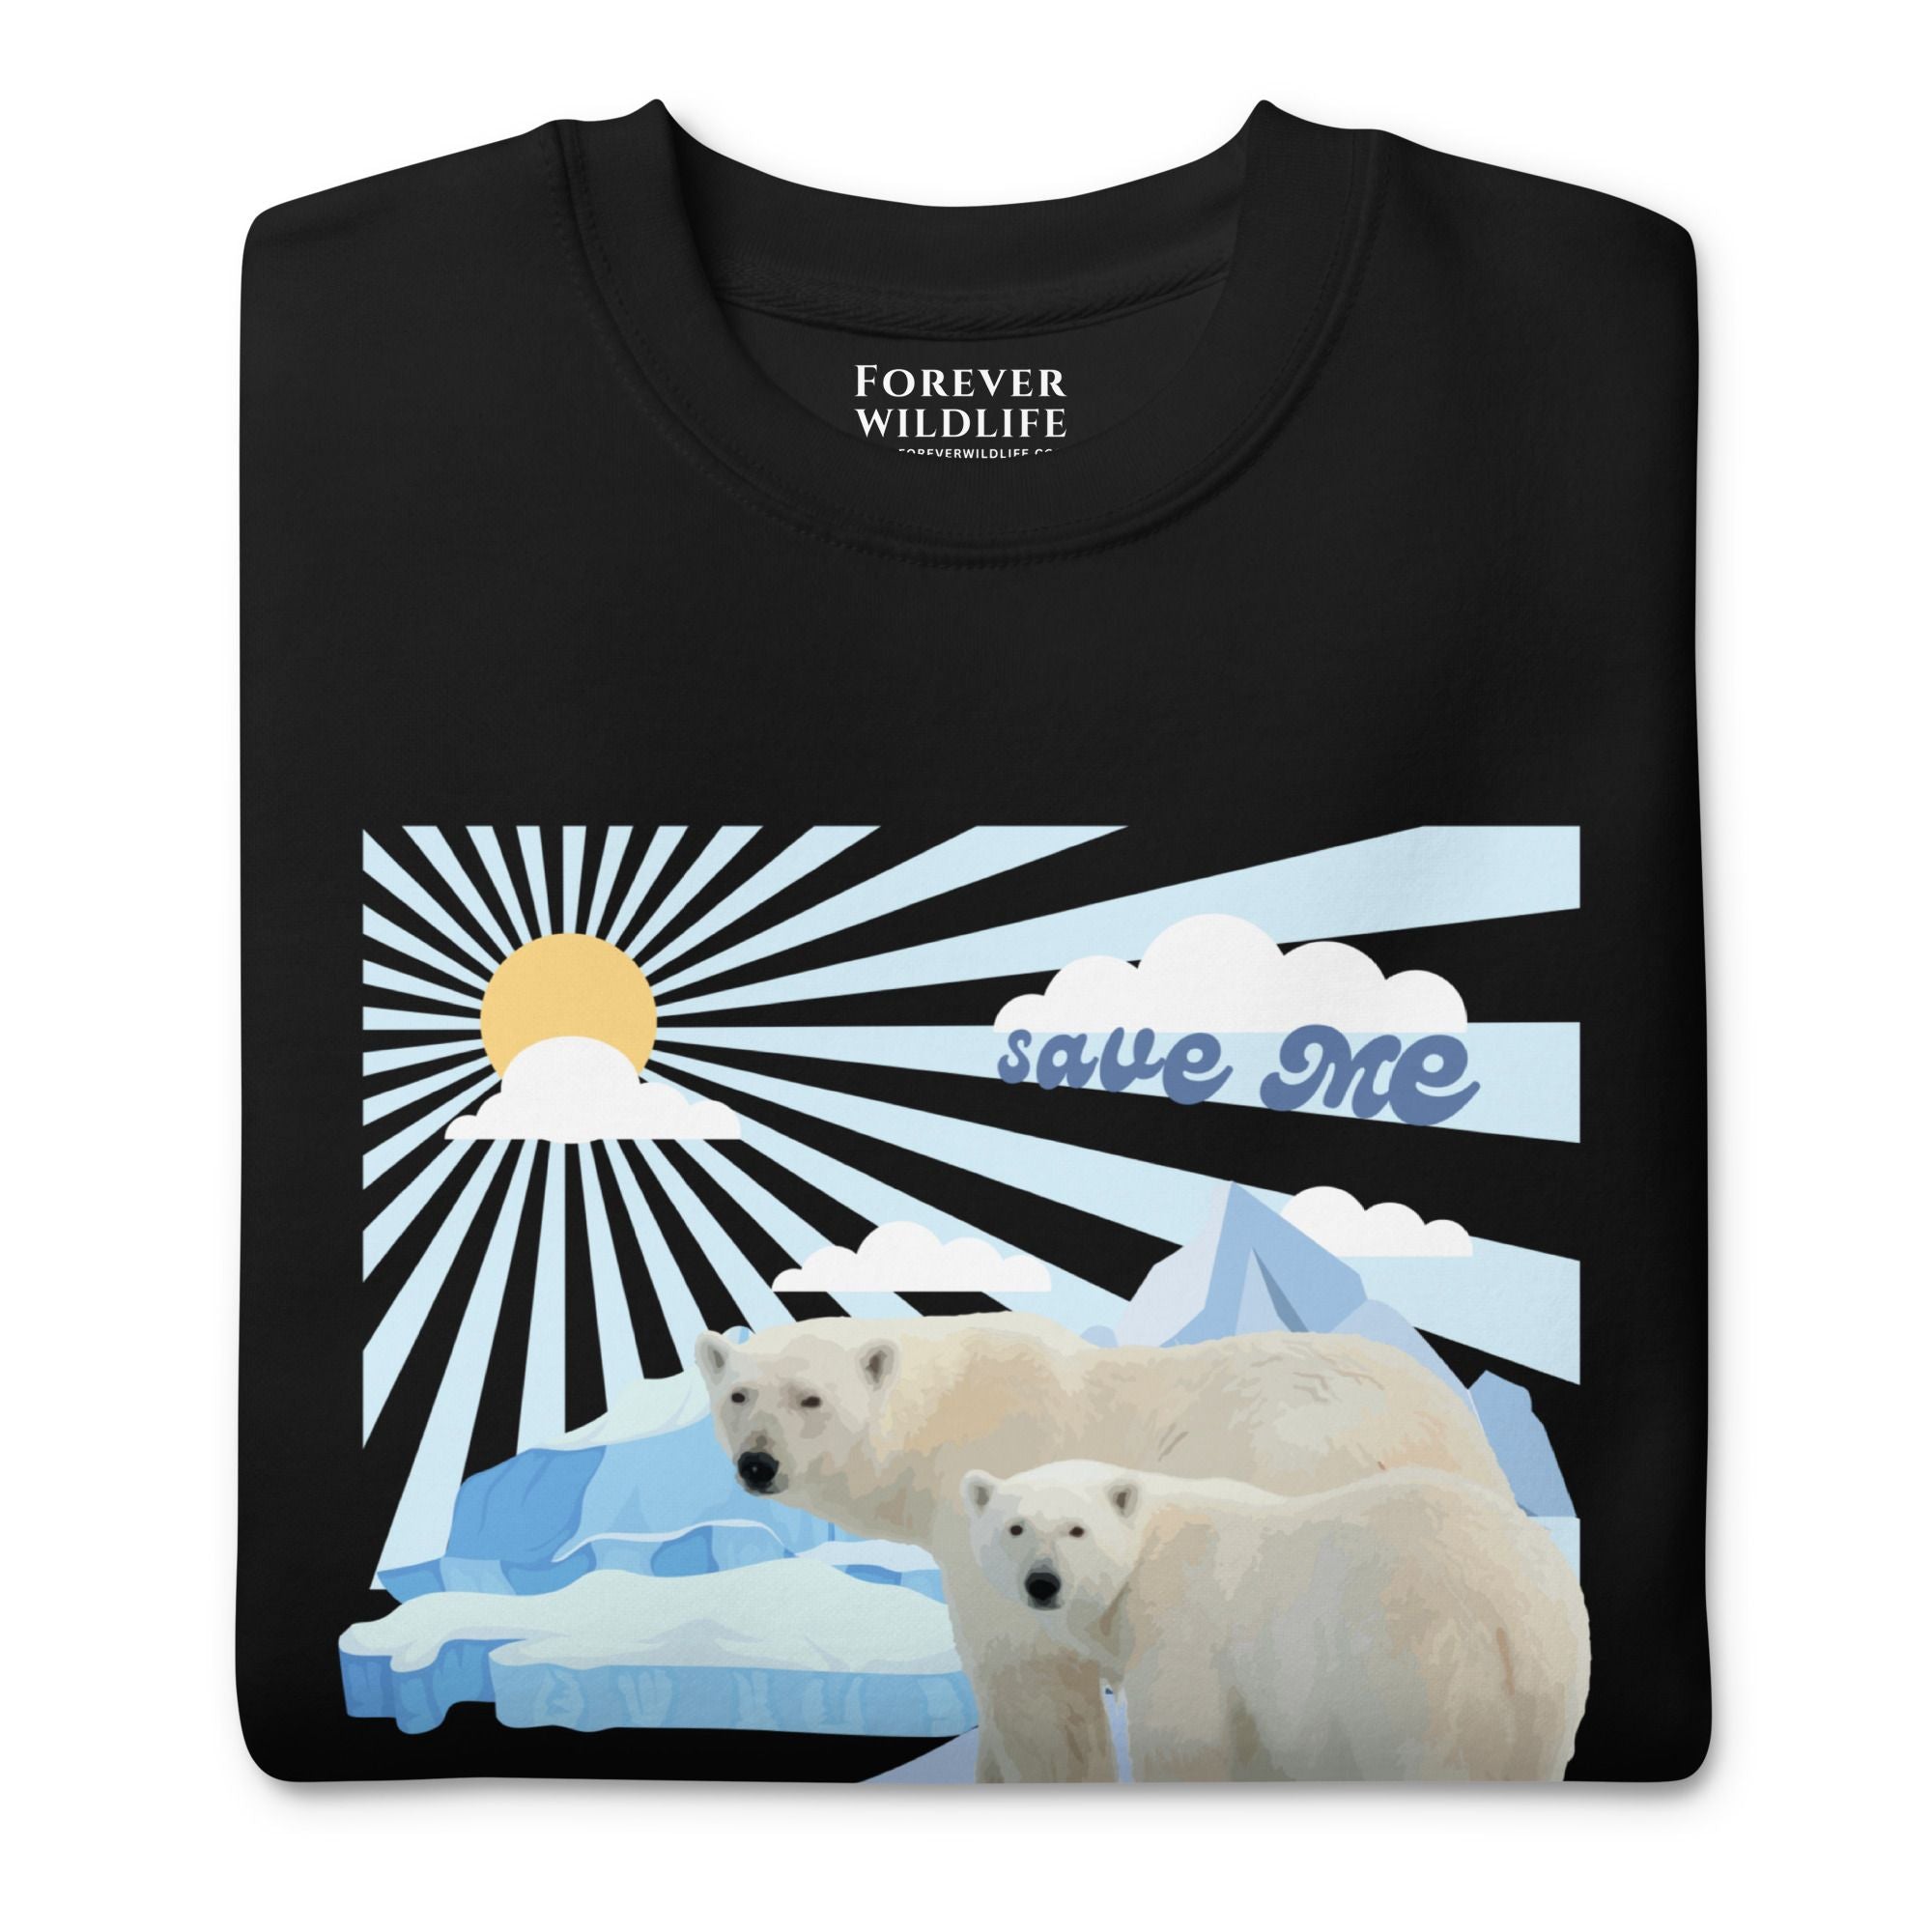 Polar Bears Sweatshirt in Black-Premium Wildlife Animal Inspiration Sweatshirt Design with 'Save Me' text, part of Wildlife Sweatshirts & Clothing from Forever Wildlife.